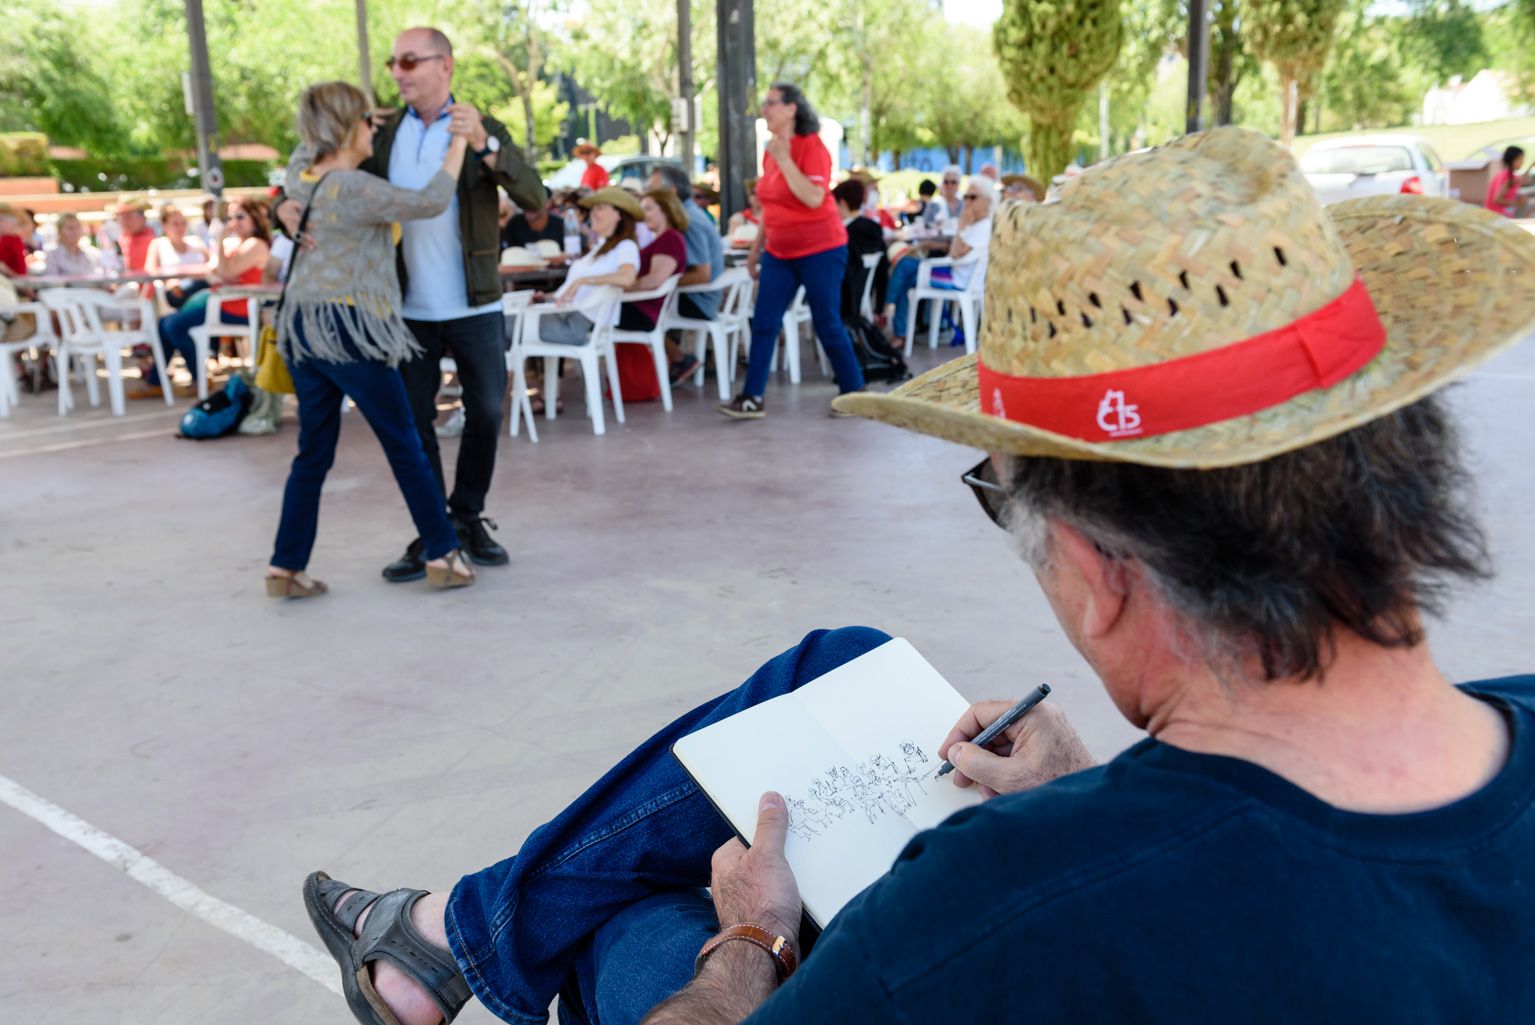 75è aniversari del Club Muntanyenc: Paella popular de germanor i actuació musical al Parc de Ramon Barnils. FOTO: Miguel López Mallach